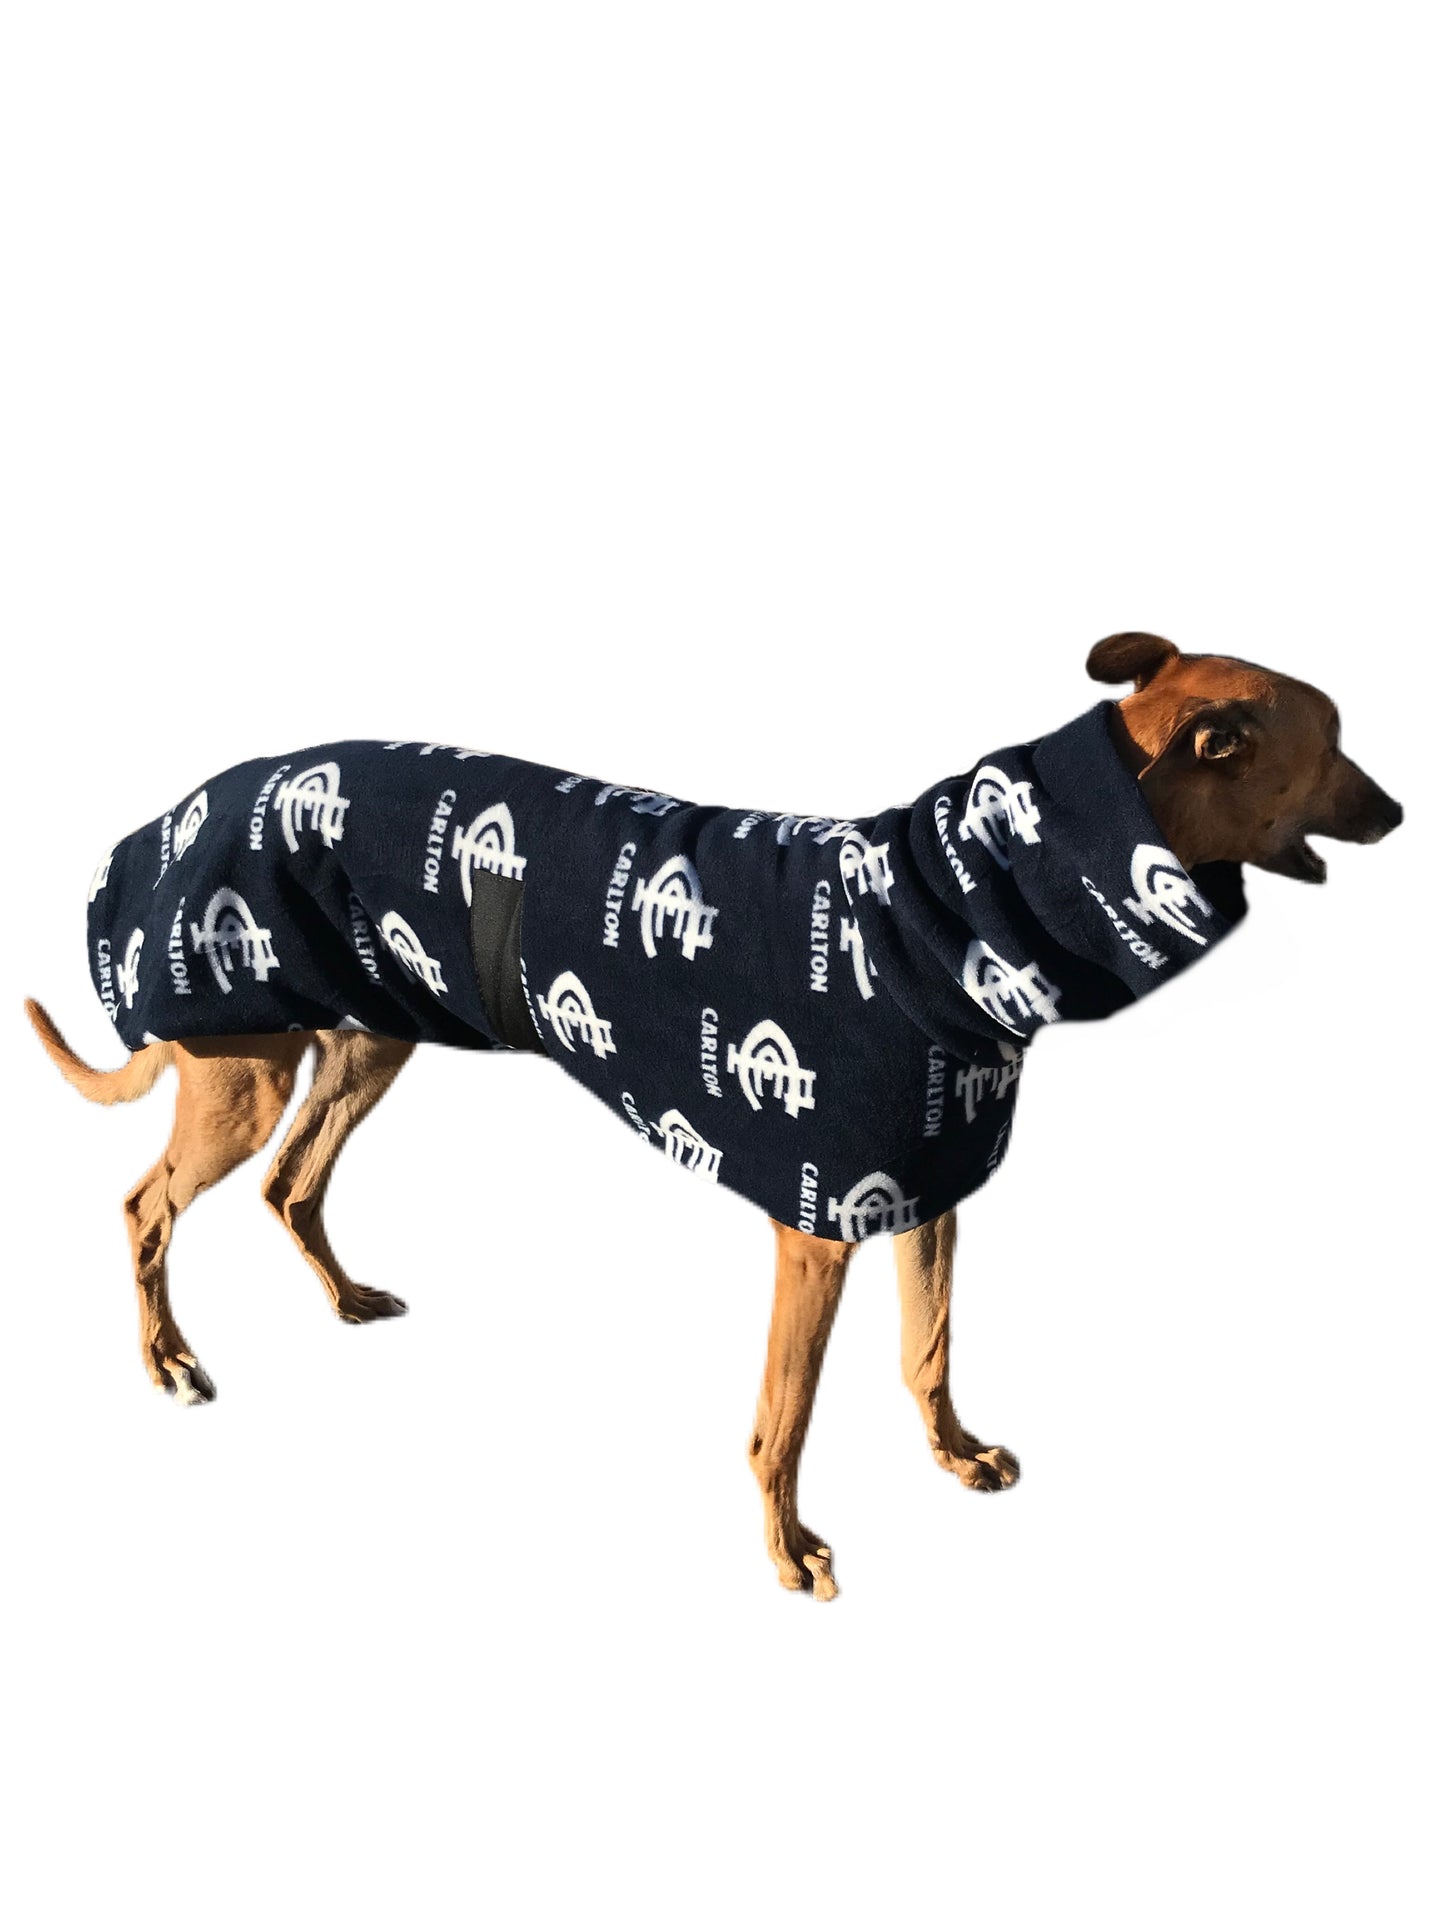 AFL Carlton inspired greyhound coat deluxe style double polar fleece washable